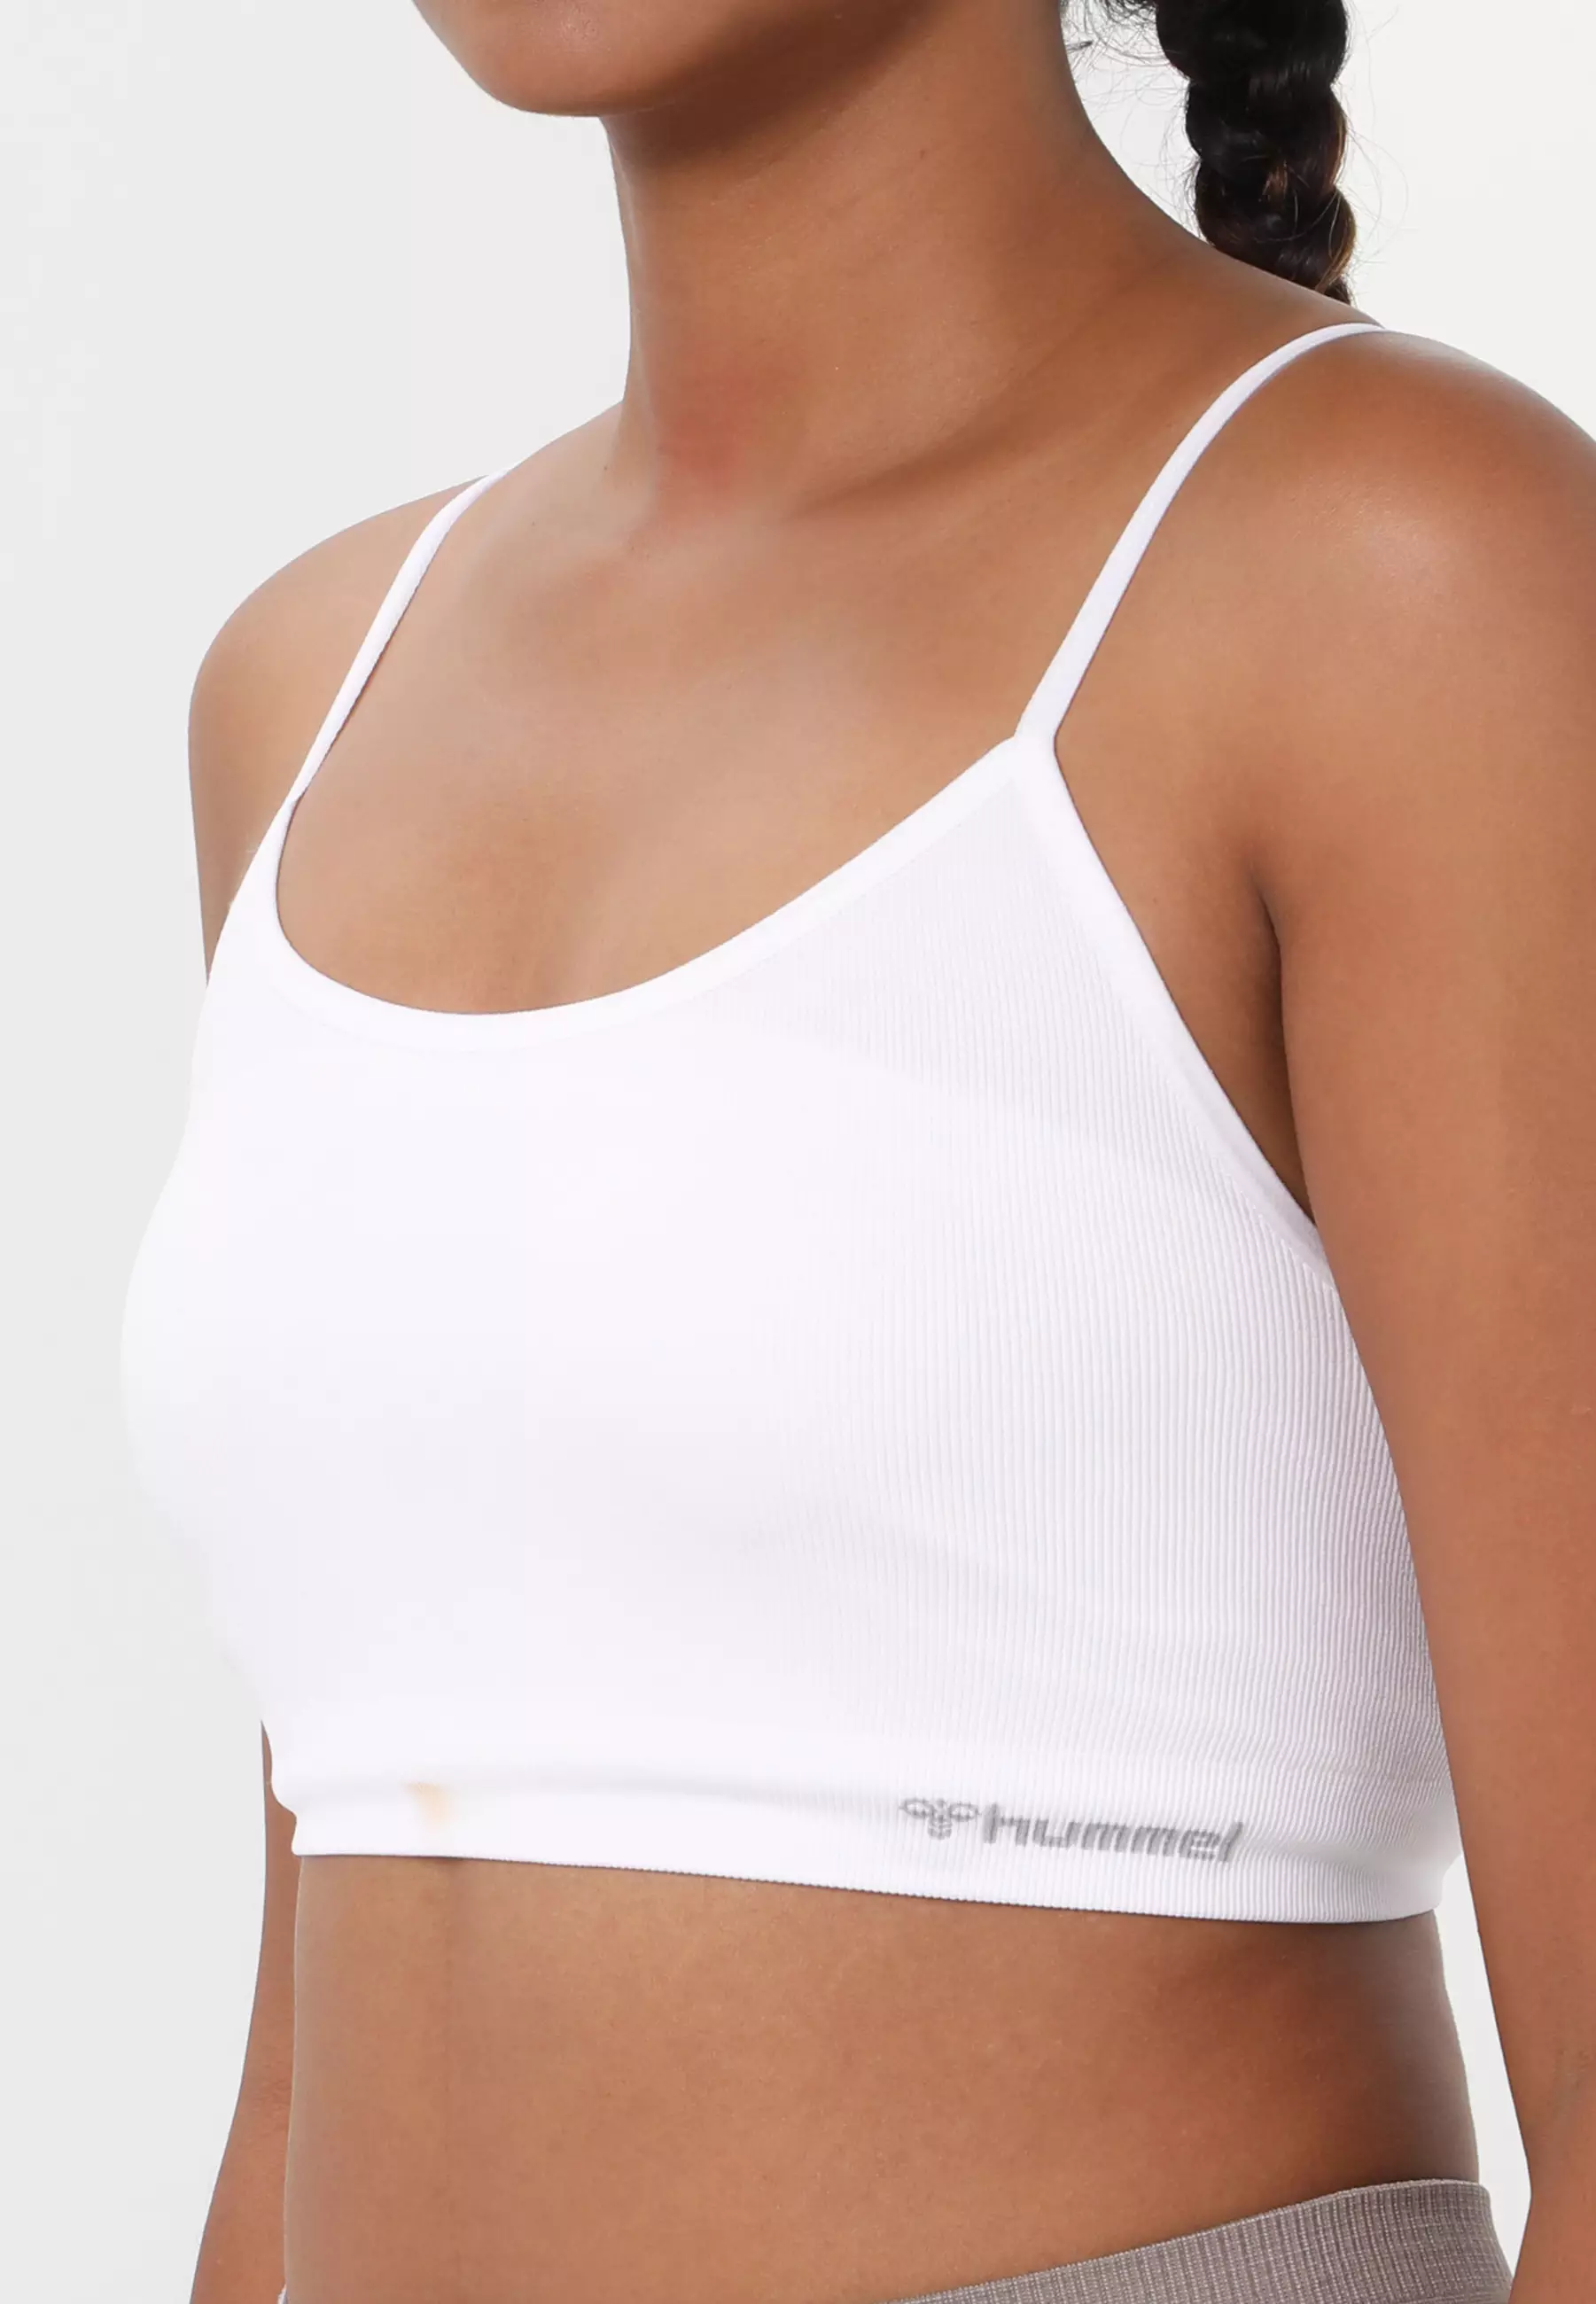 Seamless bra for women Hummel Tiffy - Hummel - Brands - Lifestyle